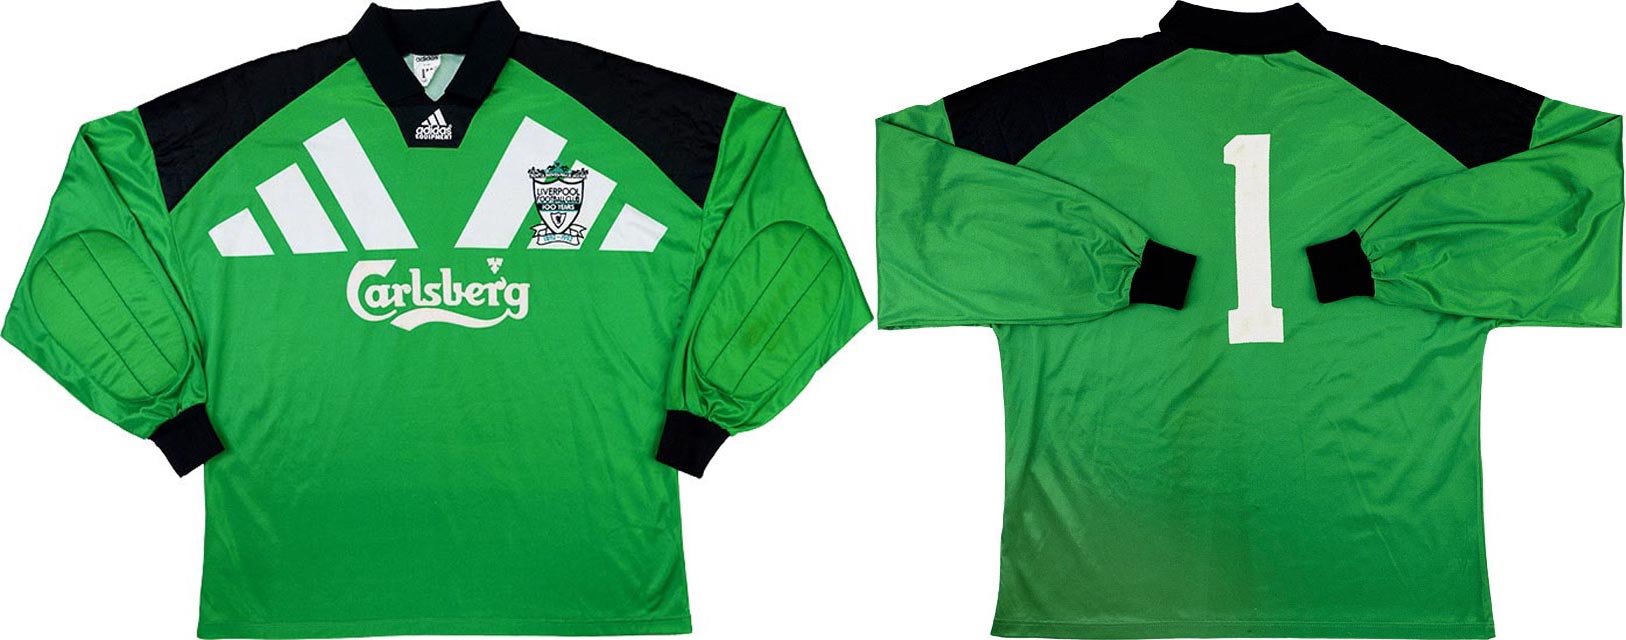 liverpool jersey 1992